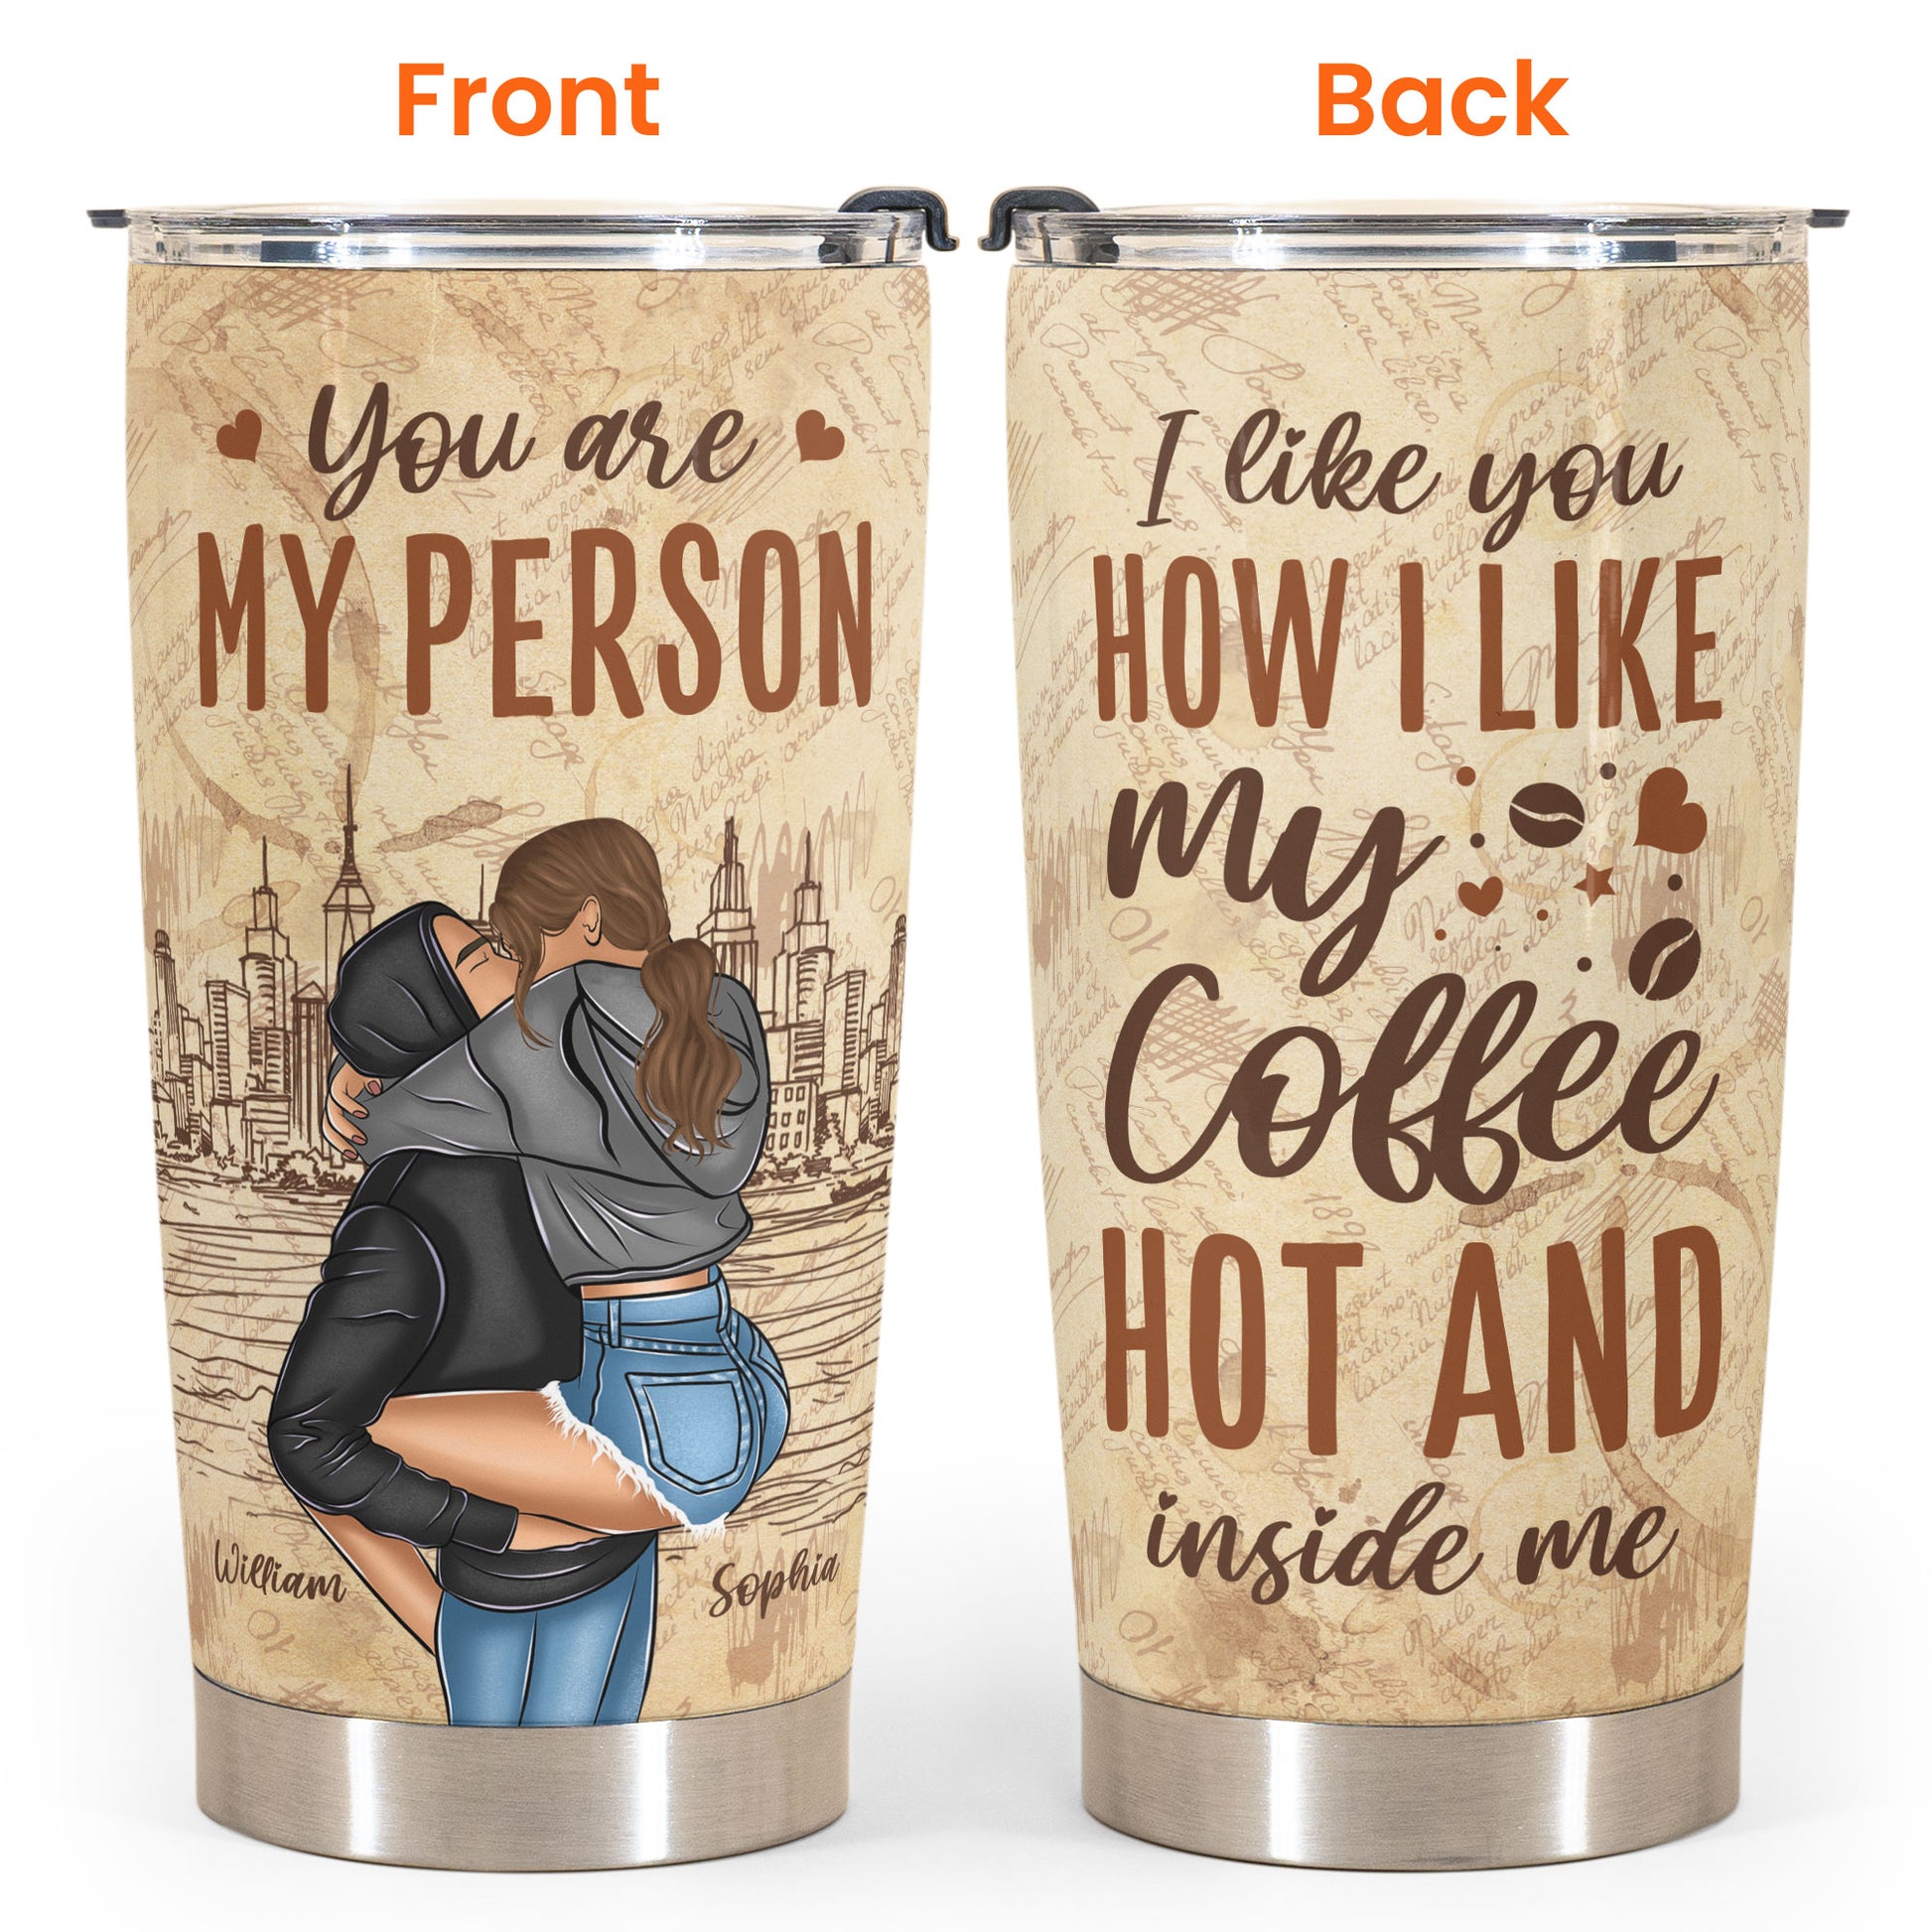 I Like You How I Like My Coffee, Hot And Inside Me - Personalized Tumb –  Macorner